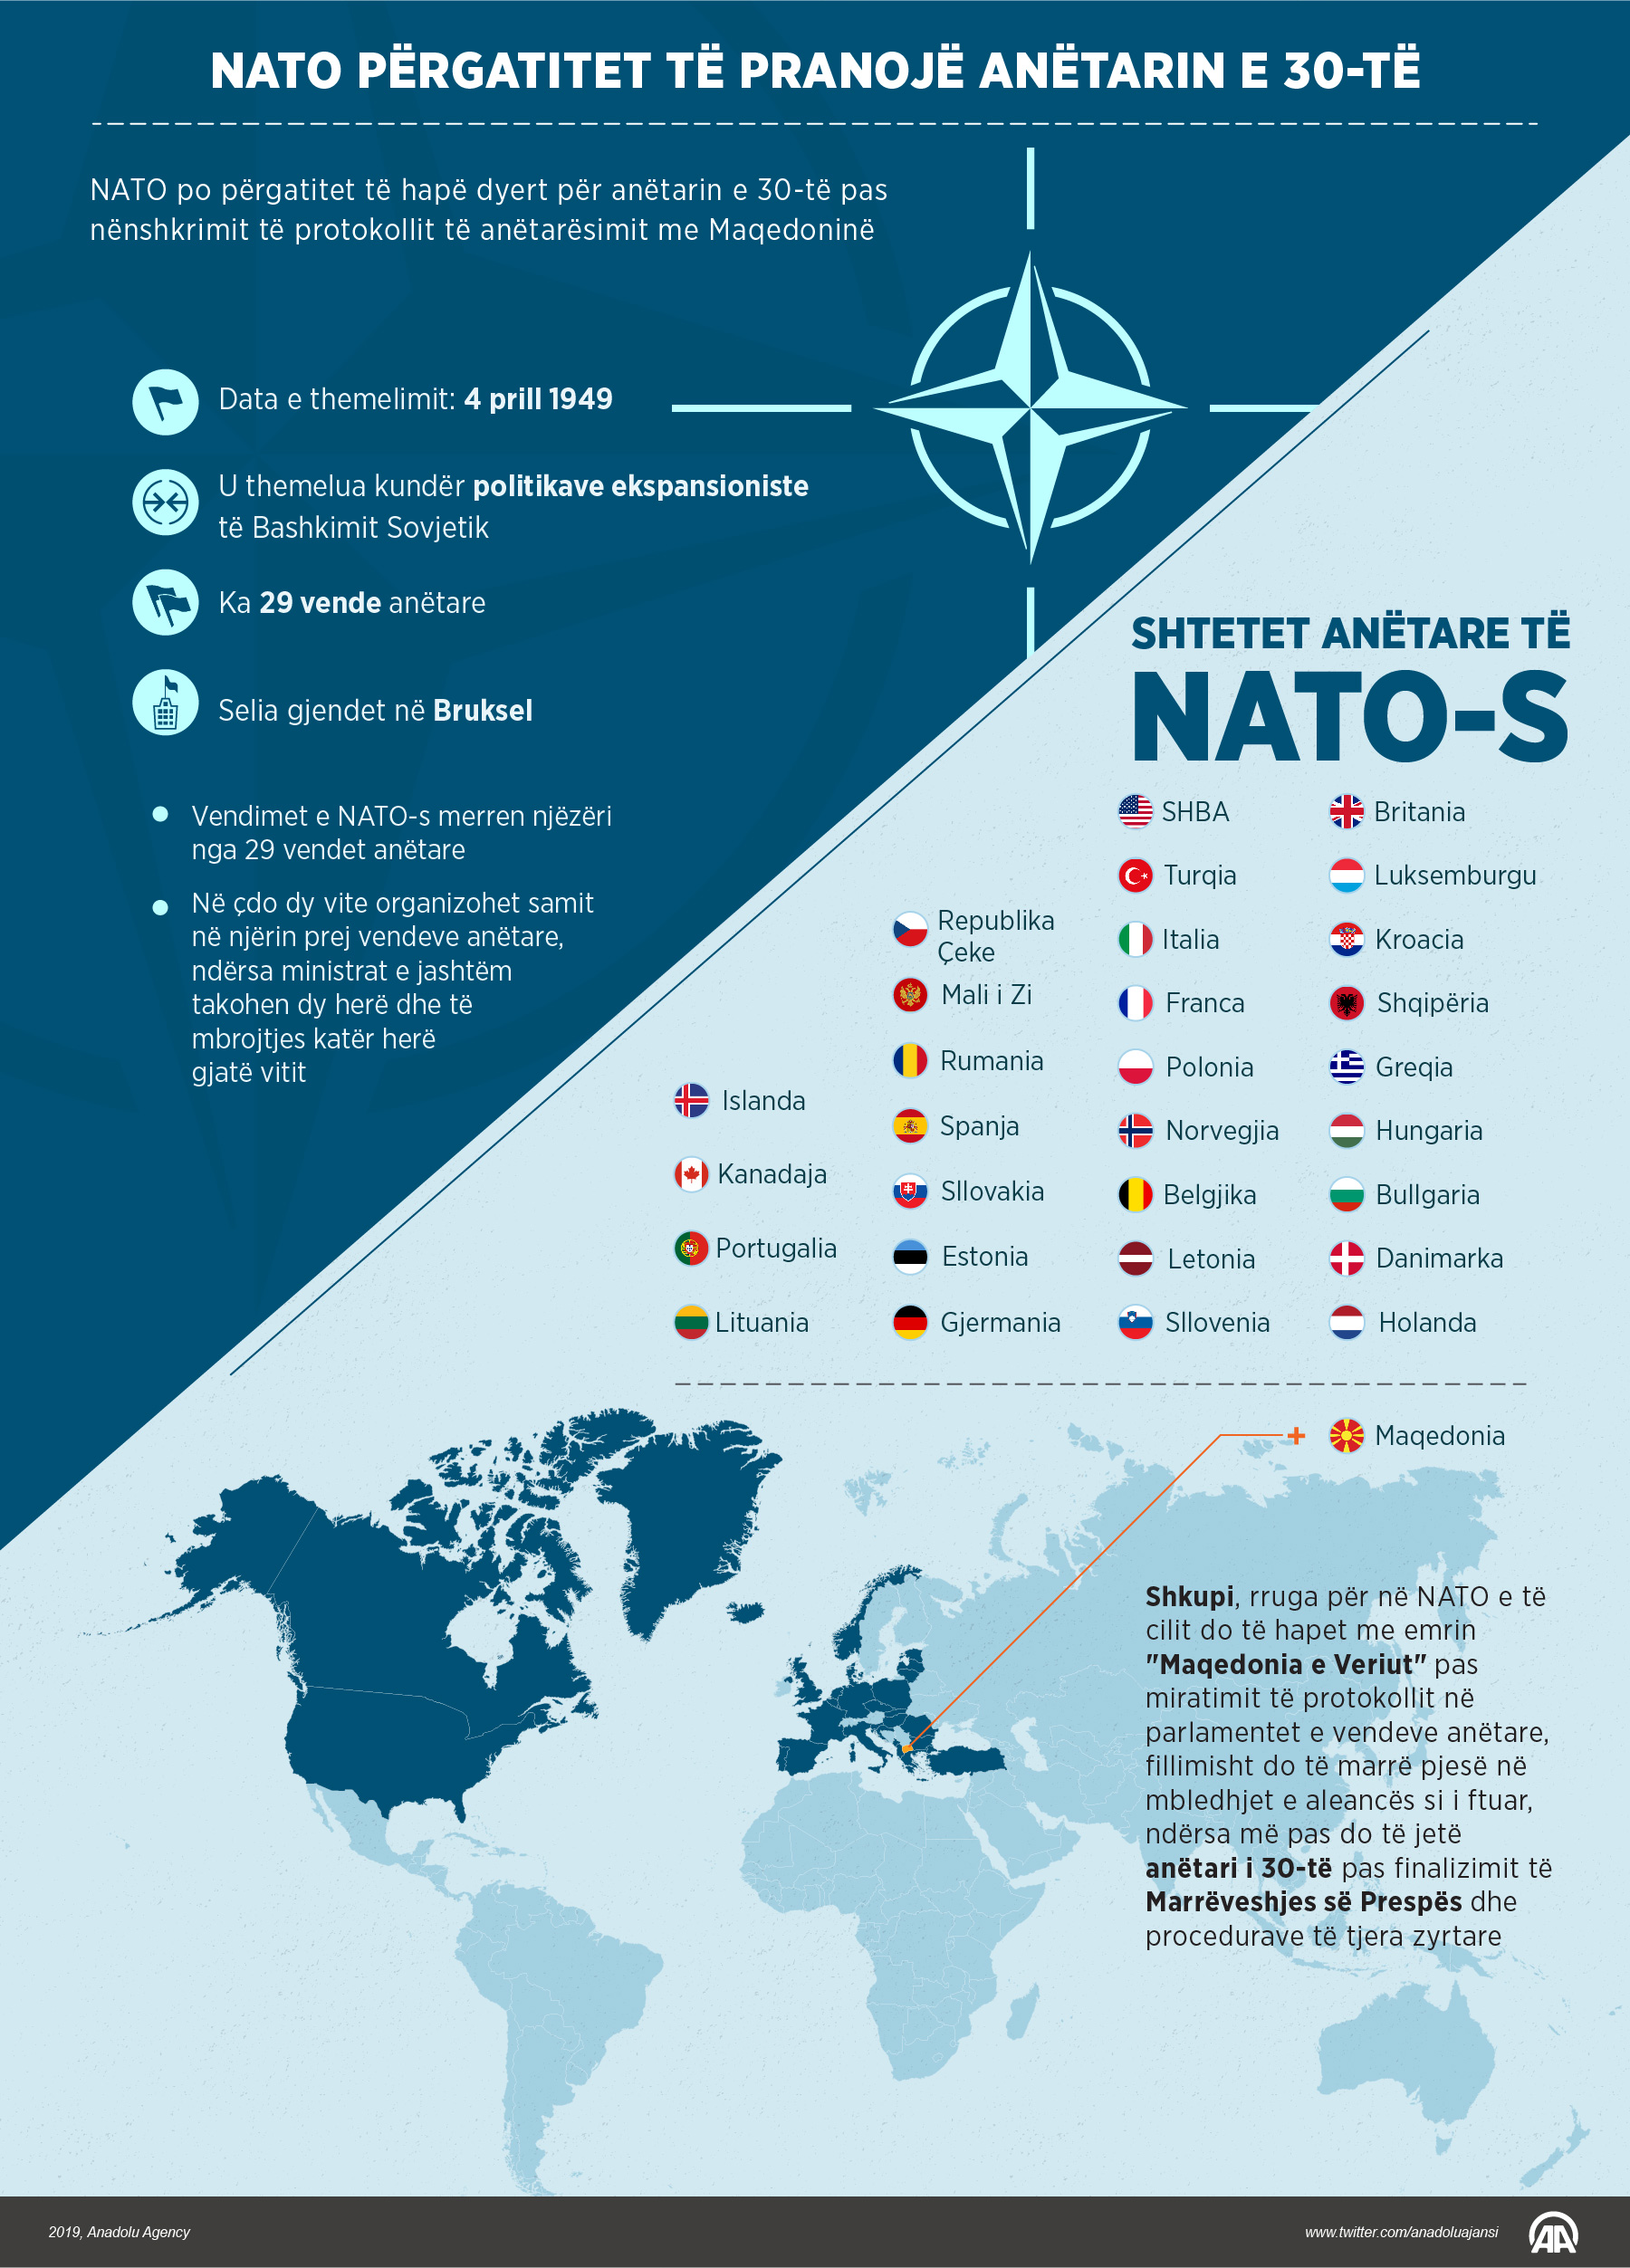 Признаки нато. Какие страны входят в Североатлантический Альянс НАТО. Состав организации Североатлантического договора НАТО. НАТО страны входящие в организацию. Государства блока НАТО.